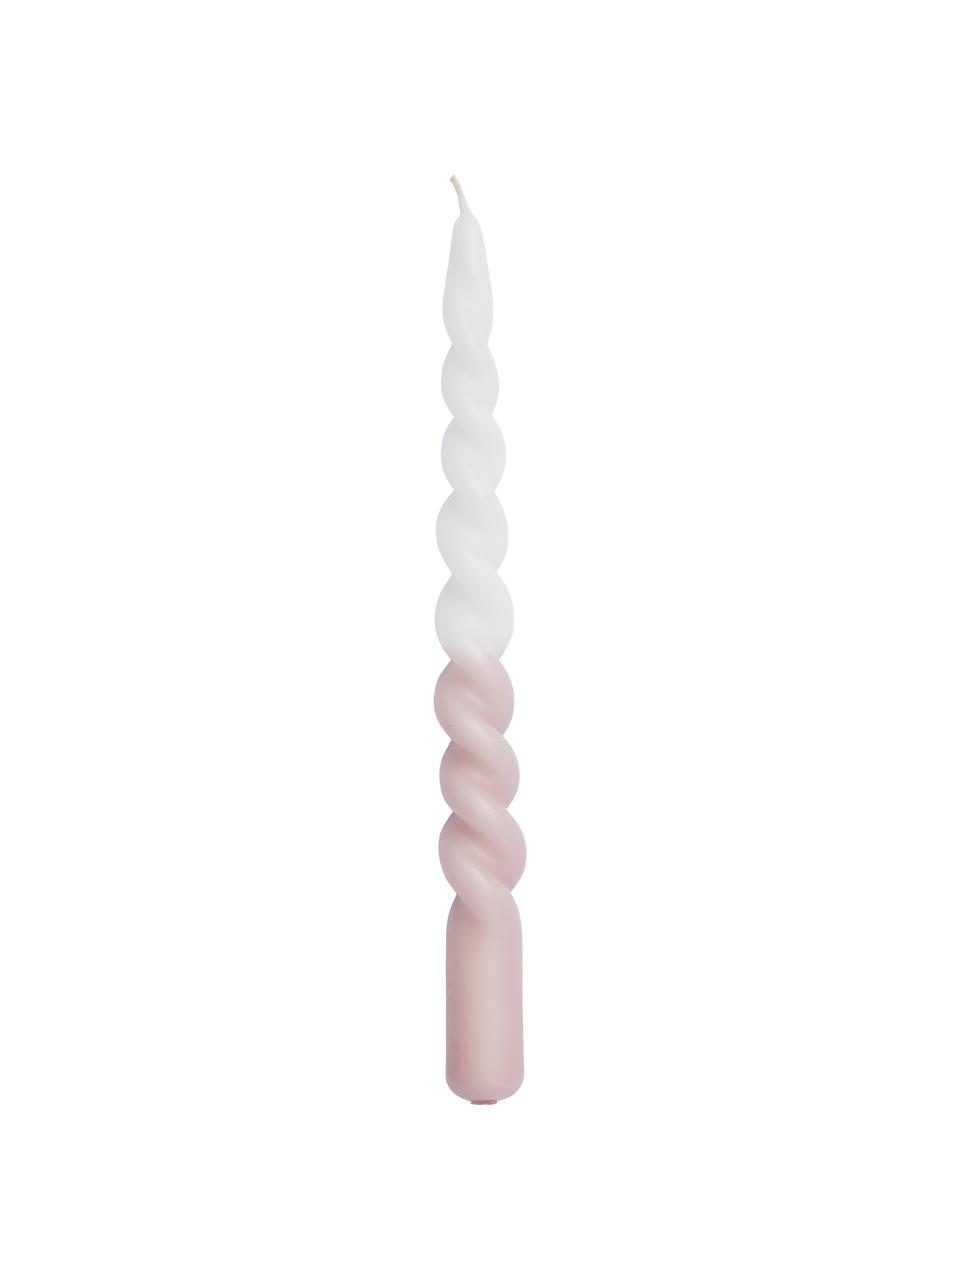 Candela bastoncino color bianco/rosa Twister 2 pz, Cera paraffinica, Bianco, rosa, Ø 2 x Alt. 25 cm